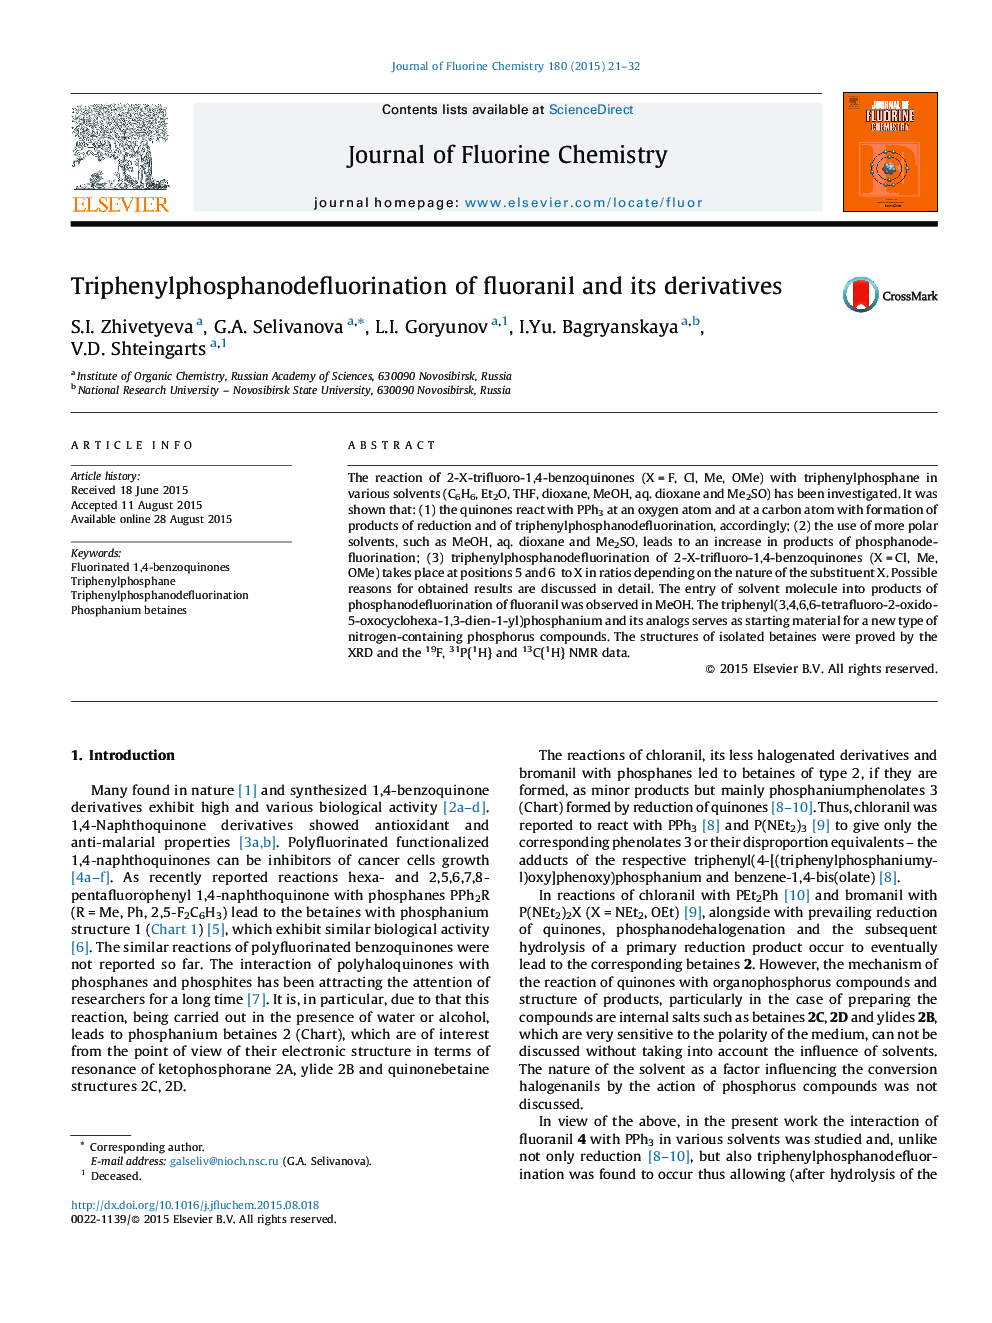 Triphenylphosphanodefluorination of fluoranil and its derivatives